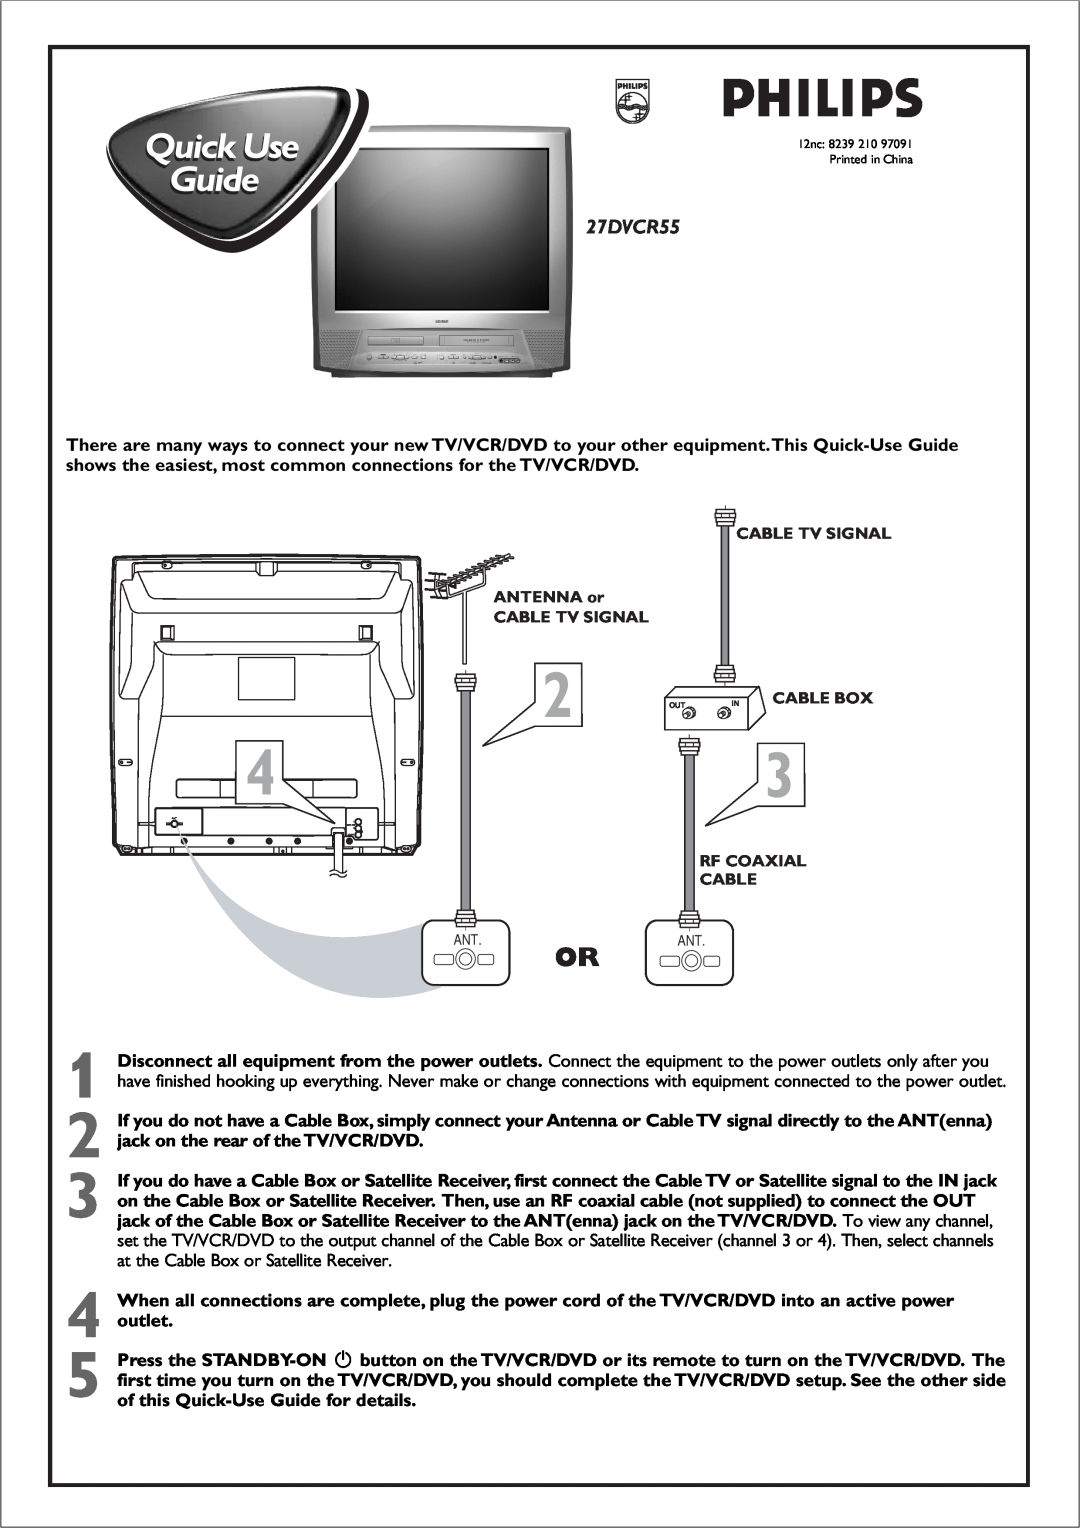 Philips 27DVCR55 manual 